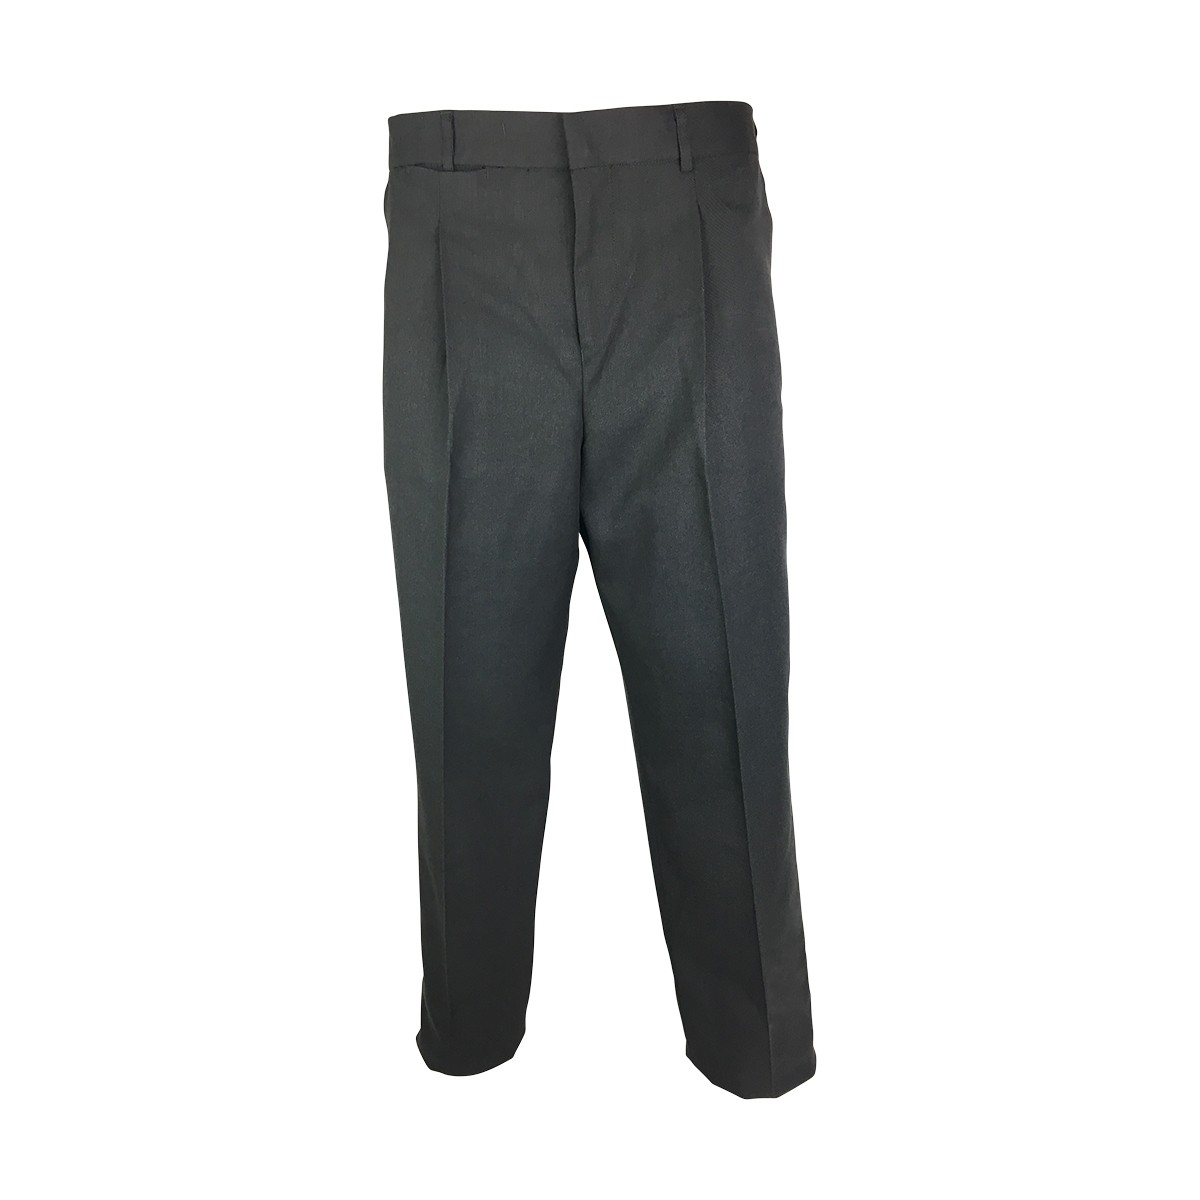 Pants Grey - Uniforms - Kimberley College (Carbrook) - Shop By School ...